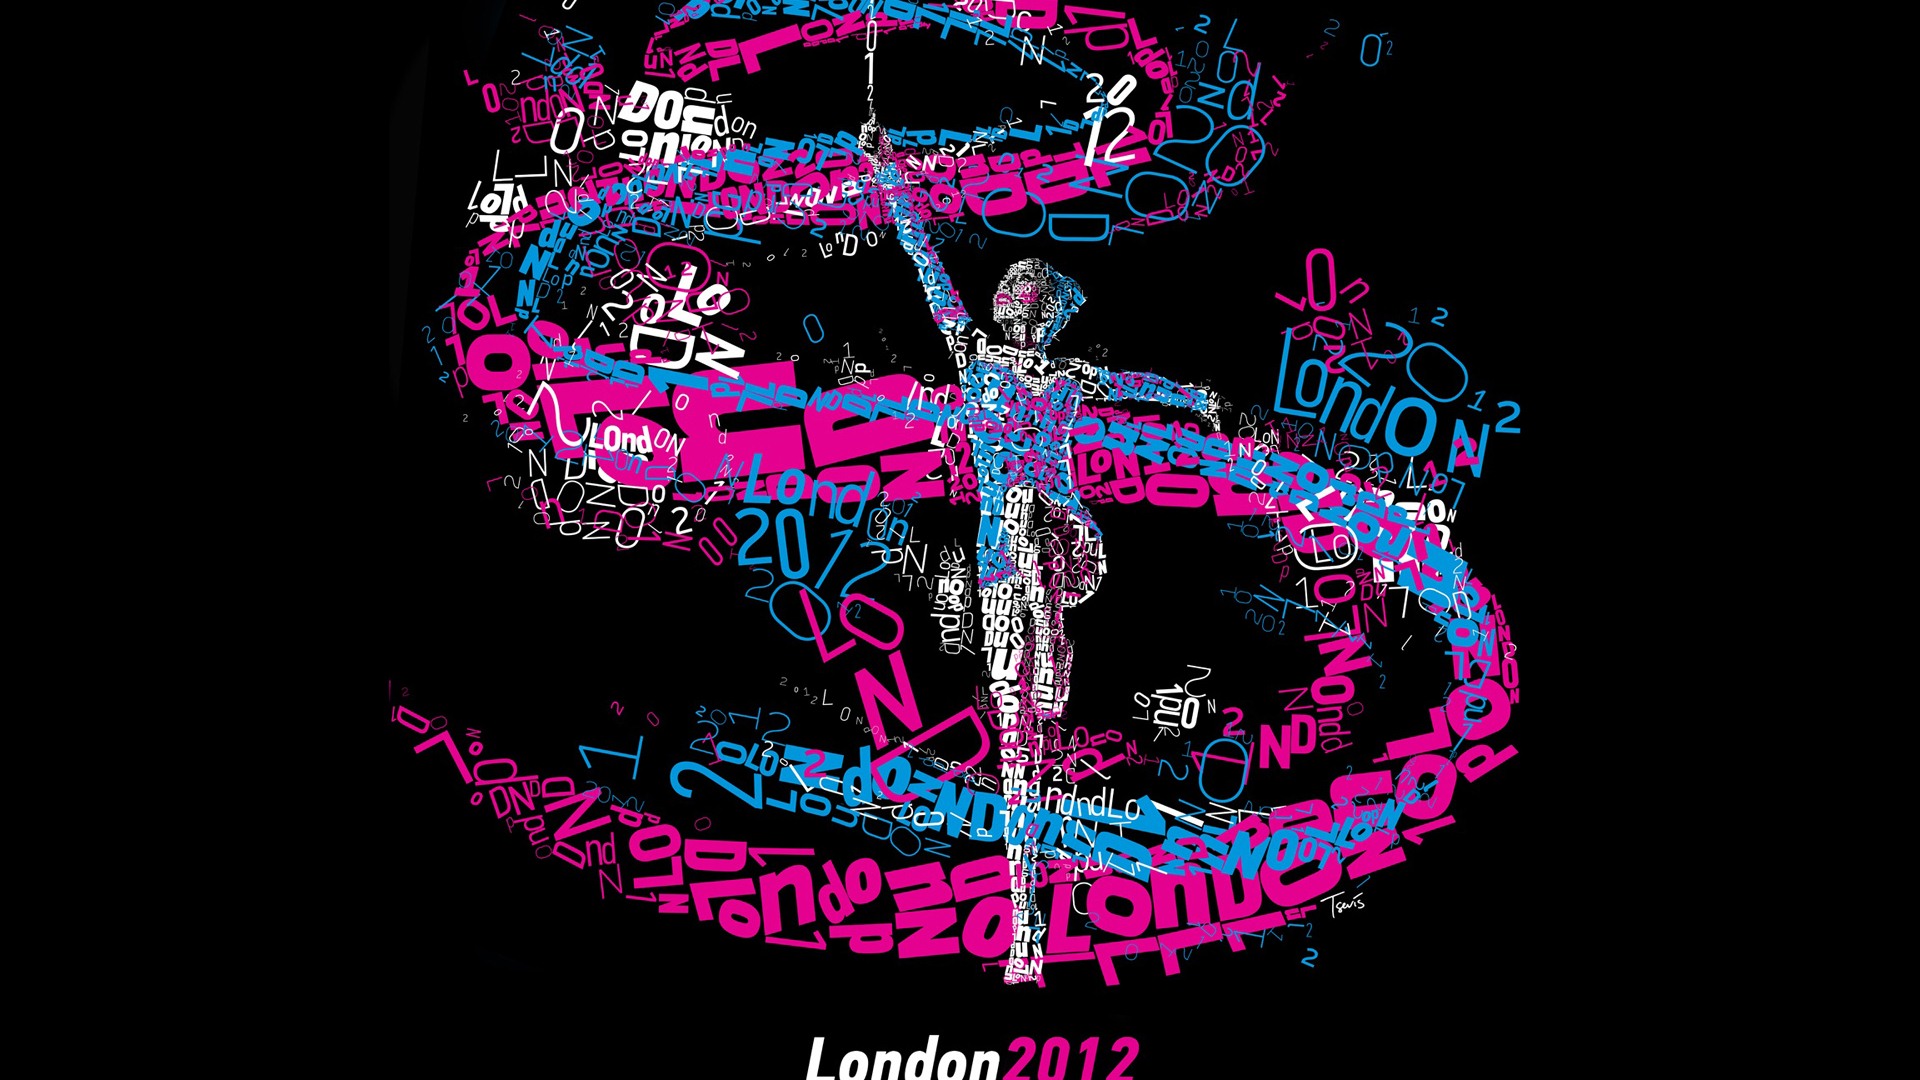 London 2012 Olympics theme wallpapers (1) #23 - 1920x1080